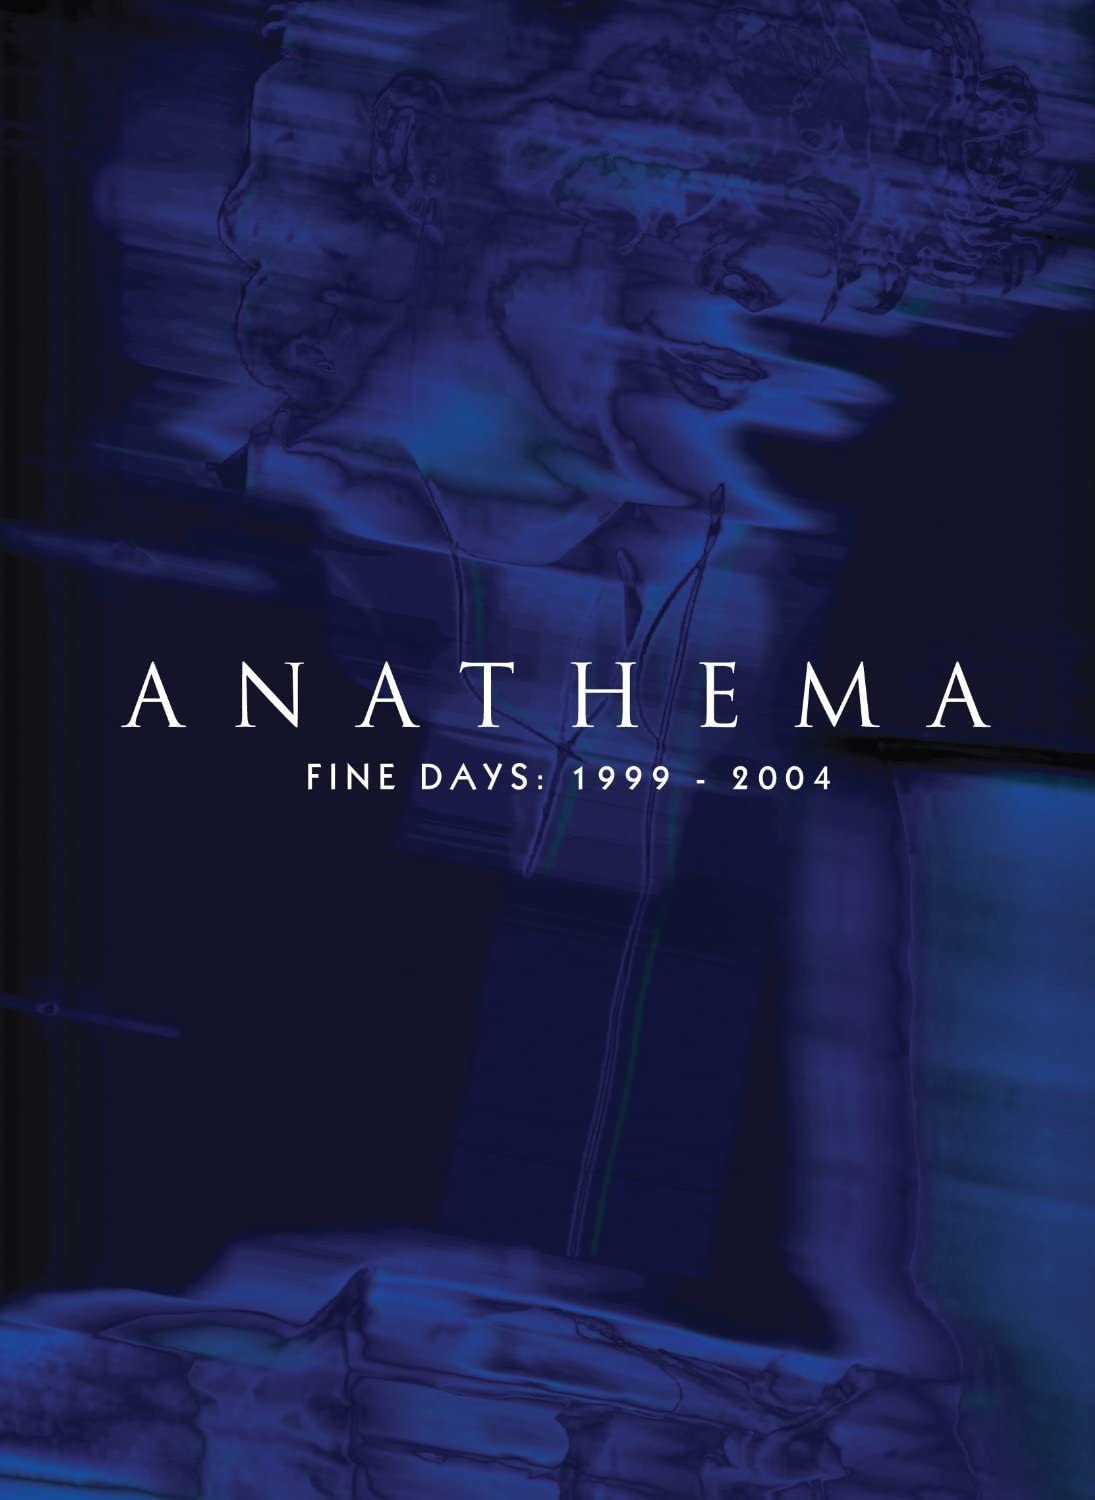 Anathema - Fine Days 1999 - 2004 - 3CD/DVD